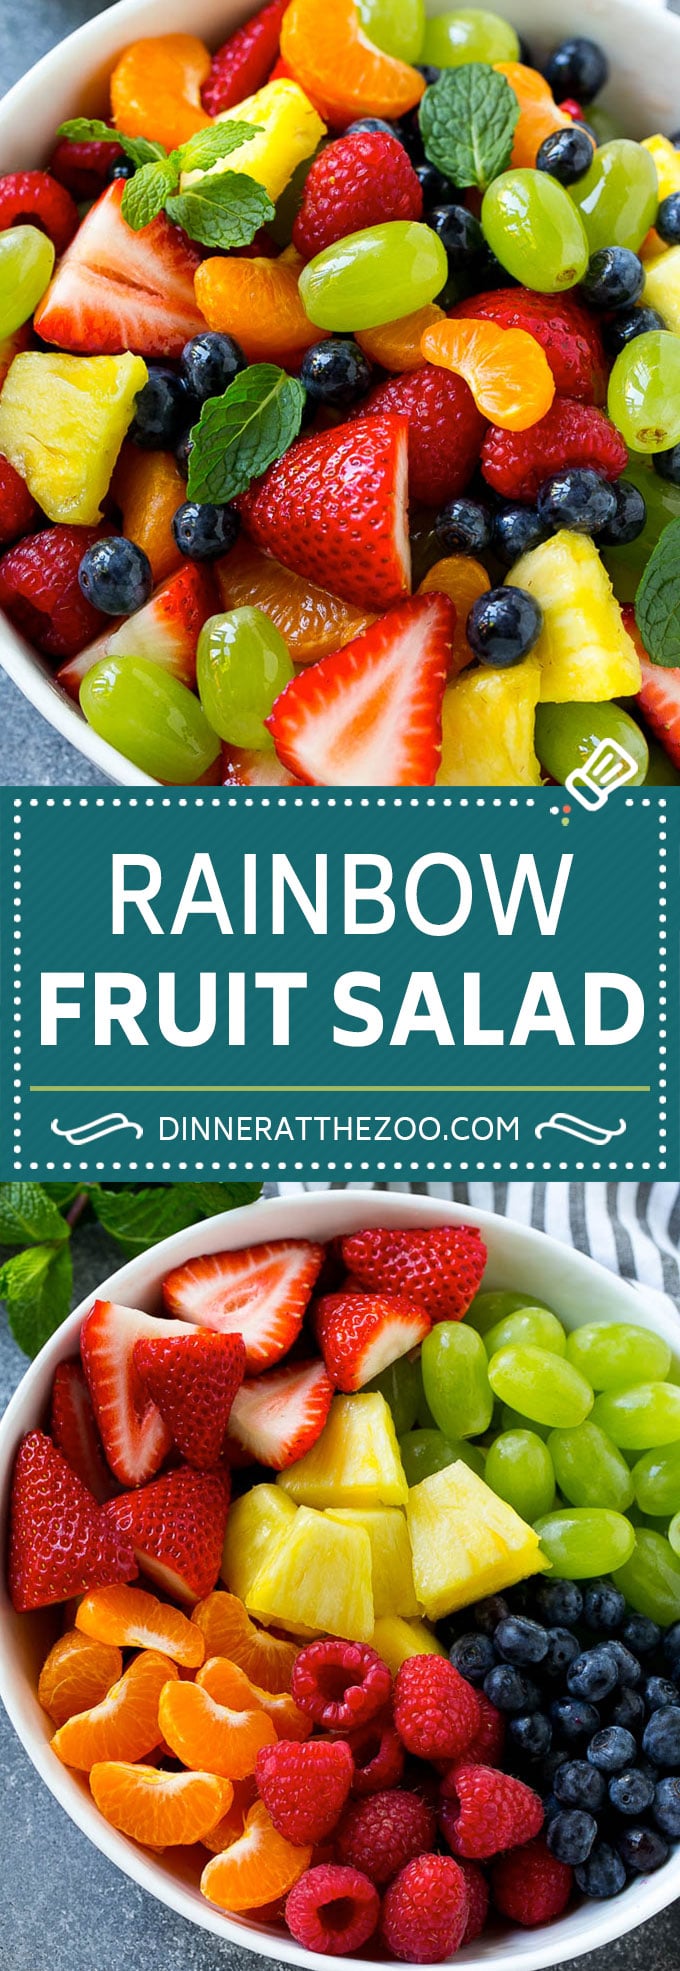 Rainbow Fruit Salad | Easy Fruit Salad | Healthy Fruit Salad #fruit #salad #healthy #dinneratthezoo